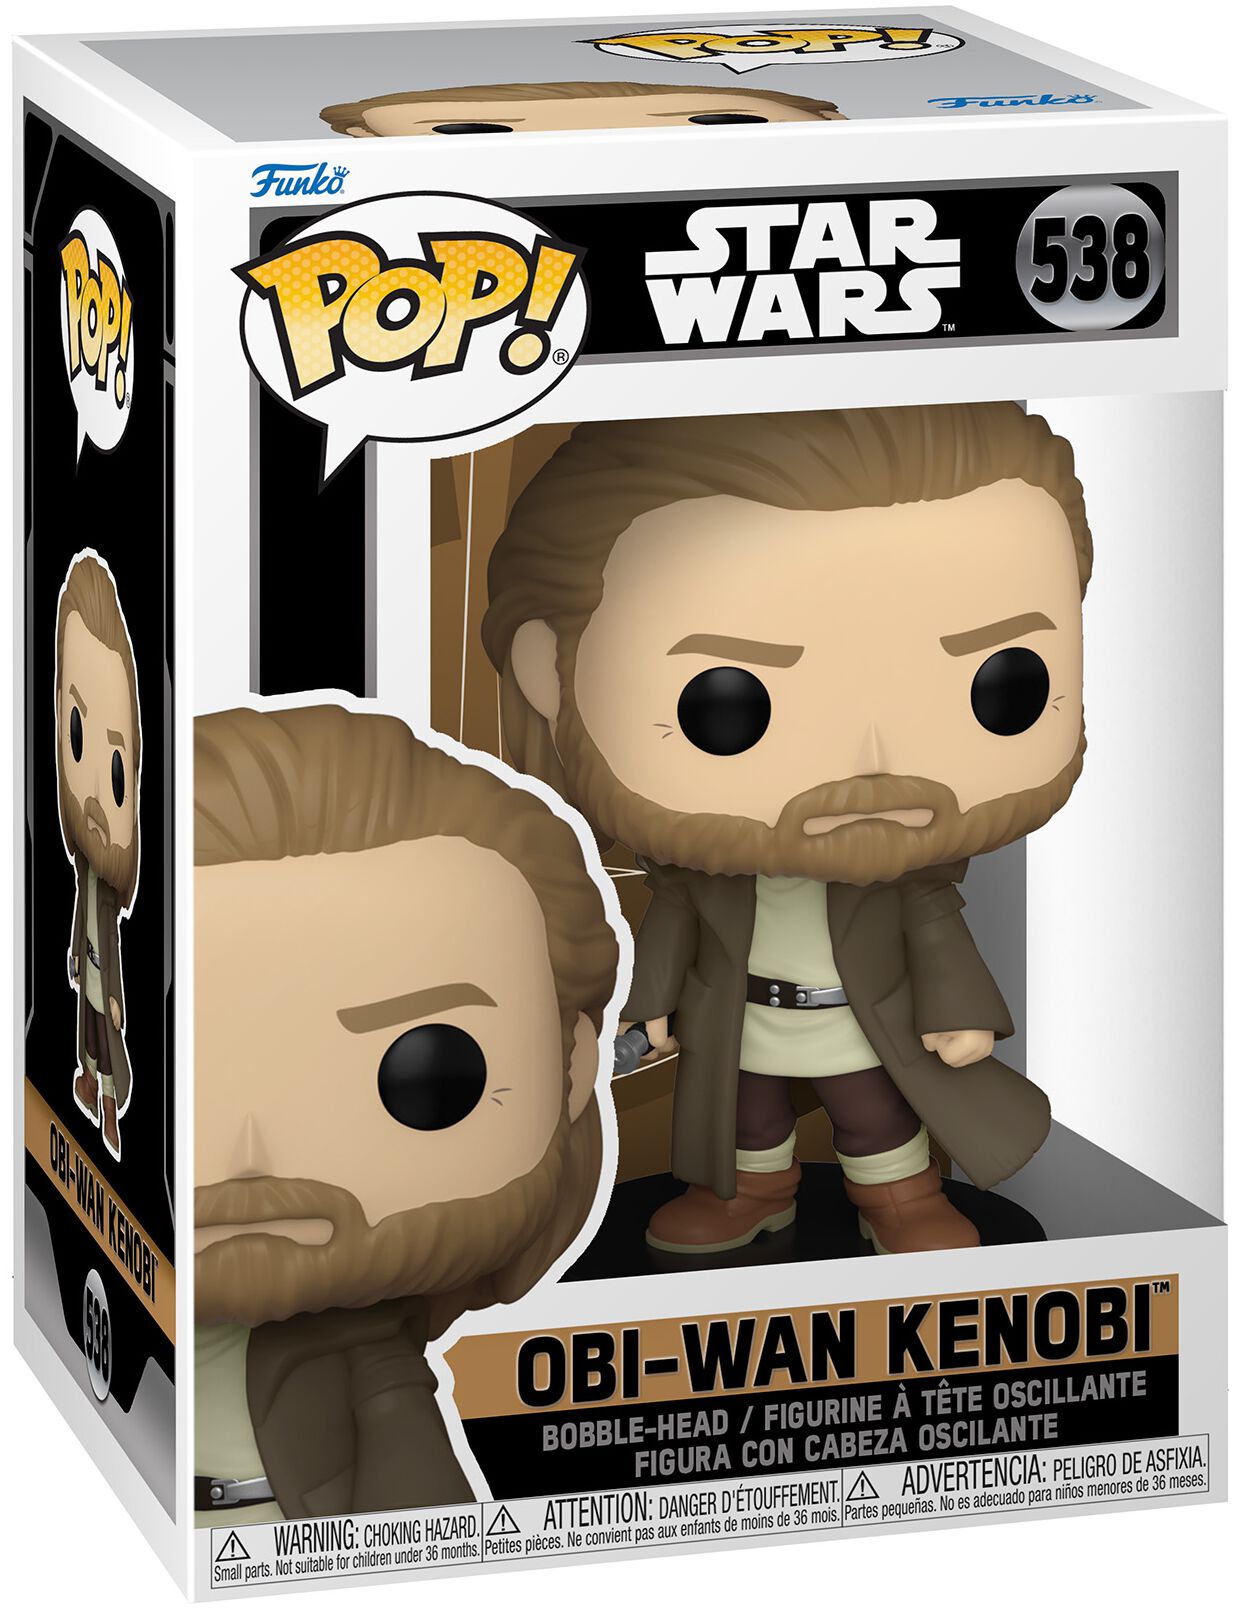 Star Wars - Obi-Wan Kenobi Vinyl Figur 538 - Funko Pop! Figur - Funko Shop Deutschland - Lizenzierter Fanartikel